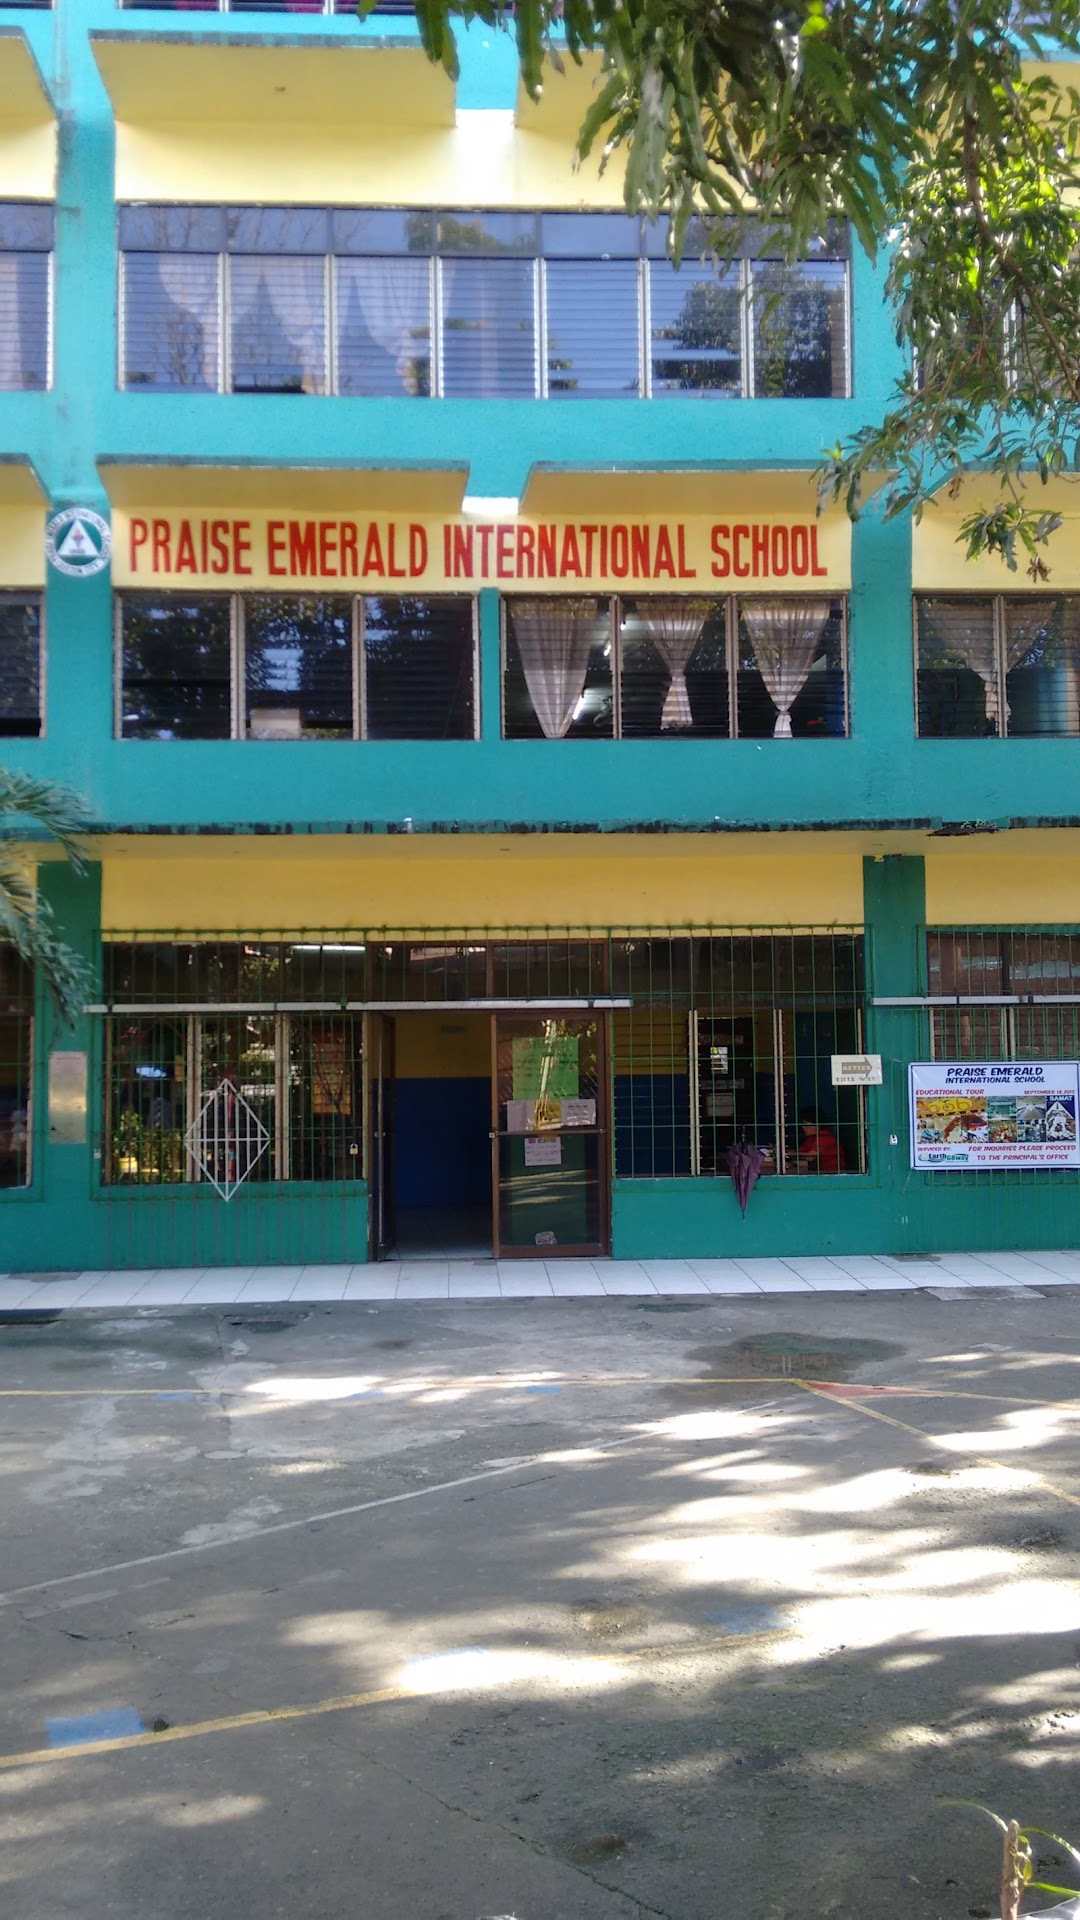 Praise Emerald International School